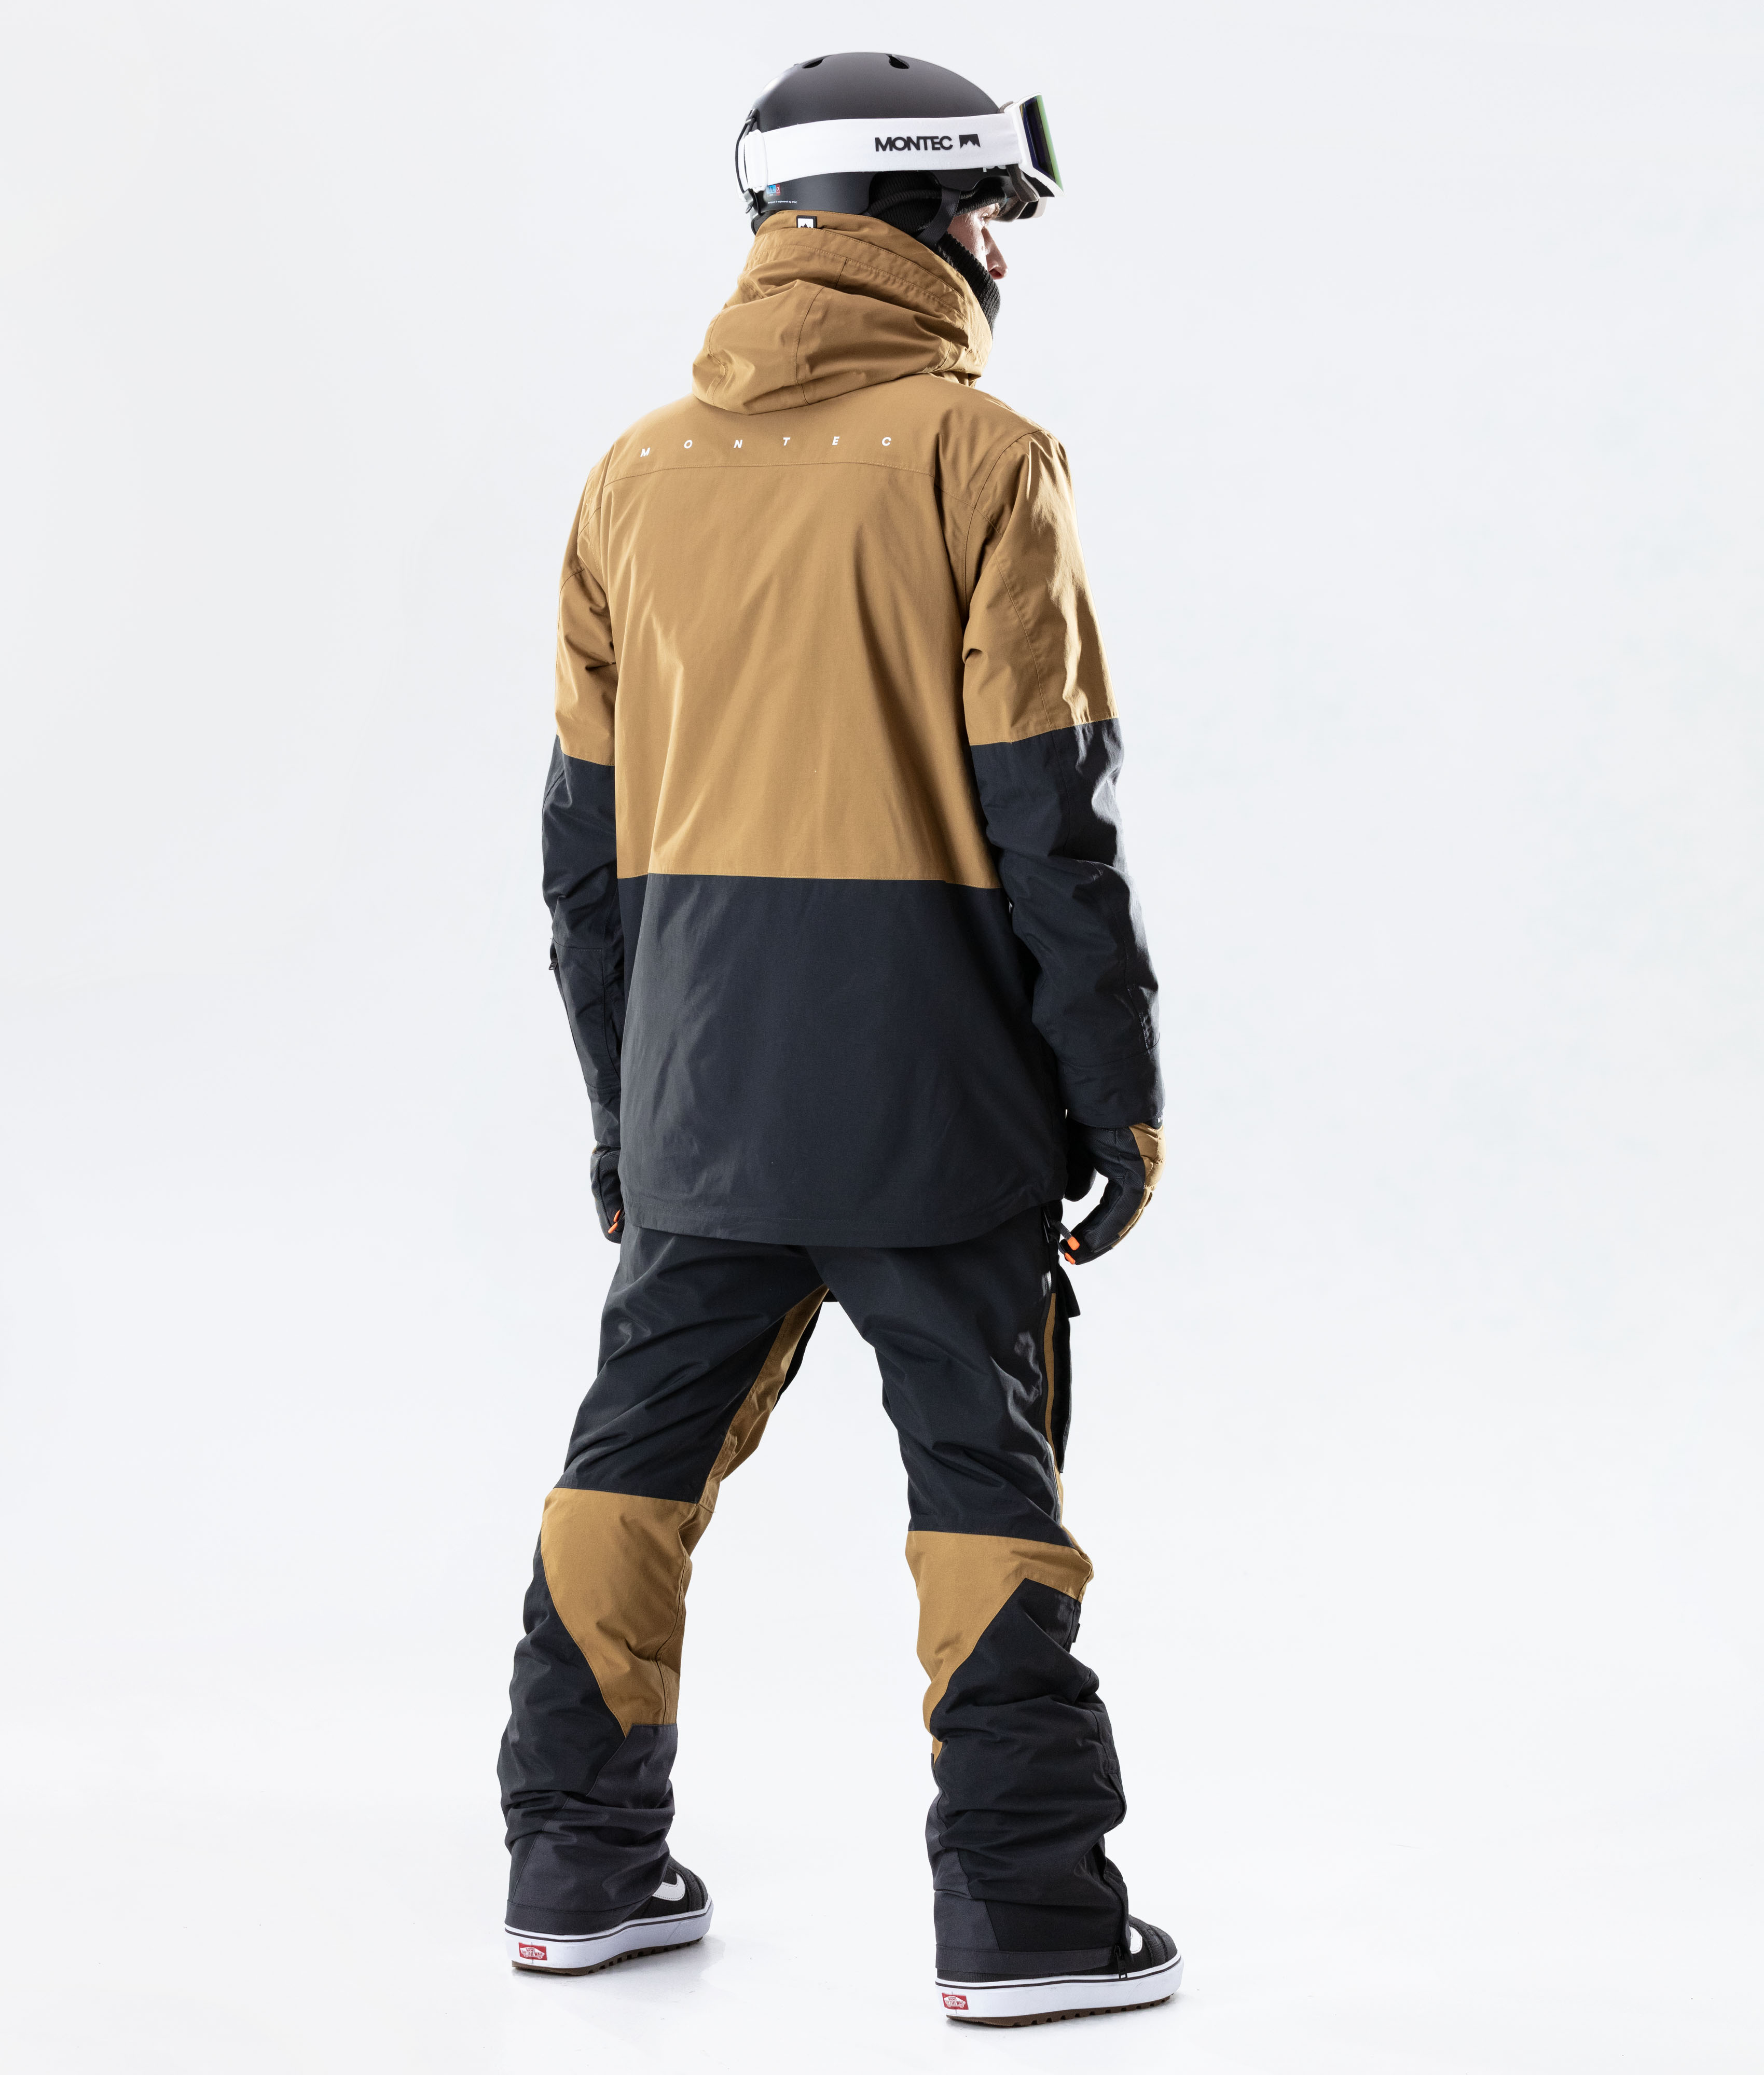 Fawk 2020 Snowboard Jacket Gold/Black | Montecwear.com